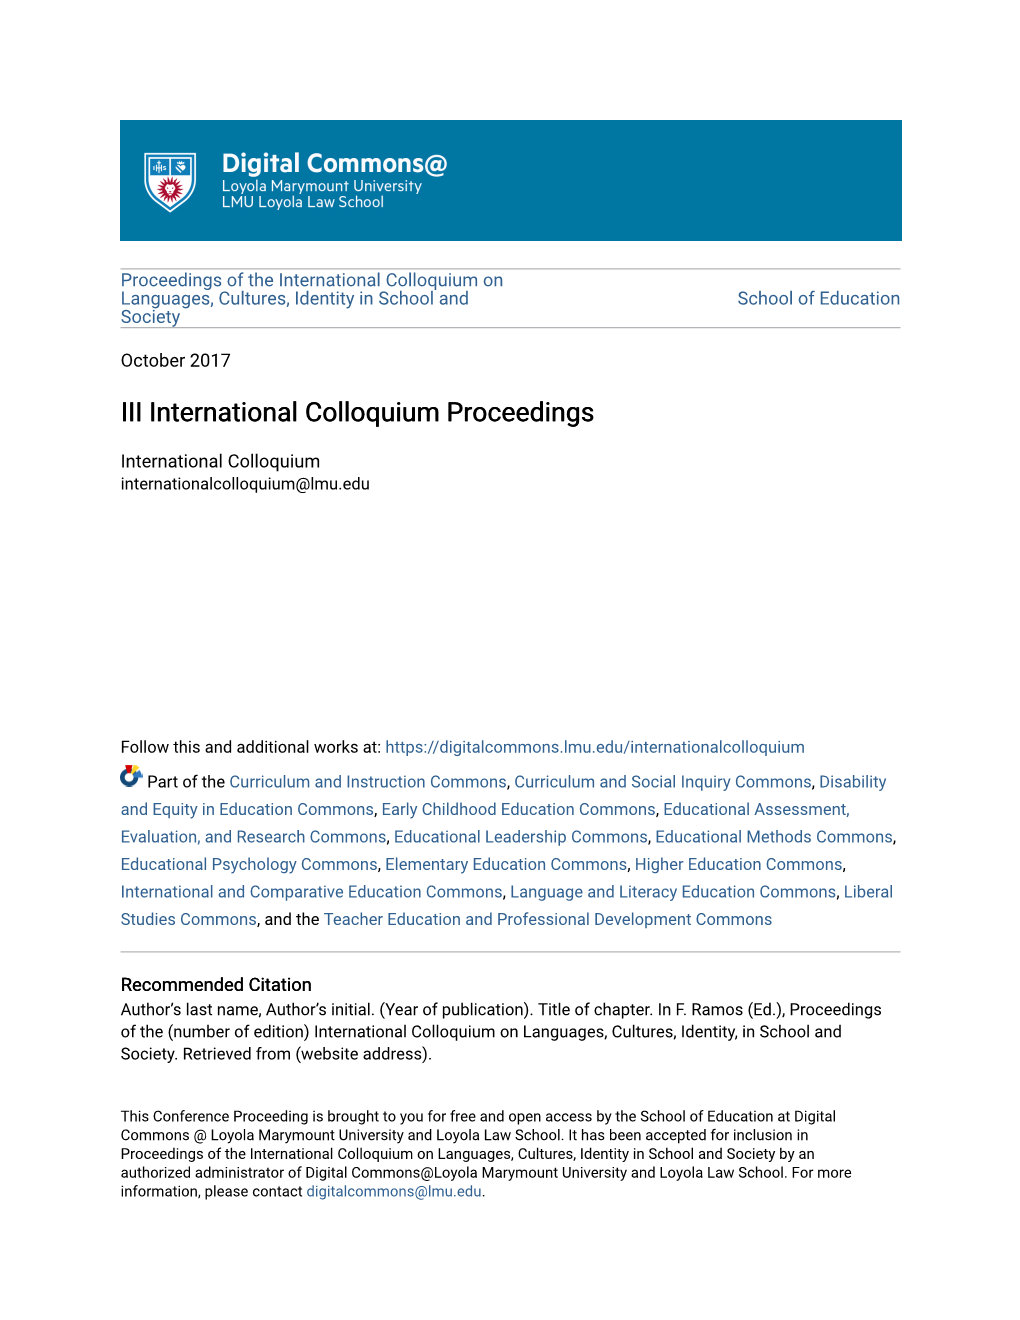 III International Colloquium Proceedings